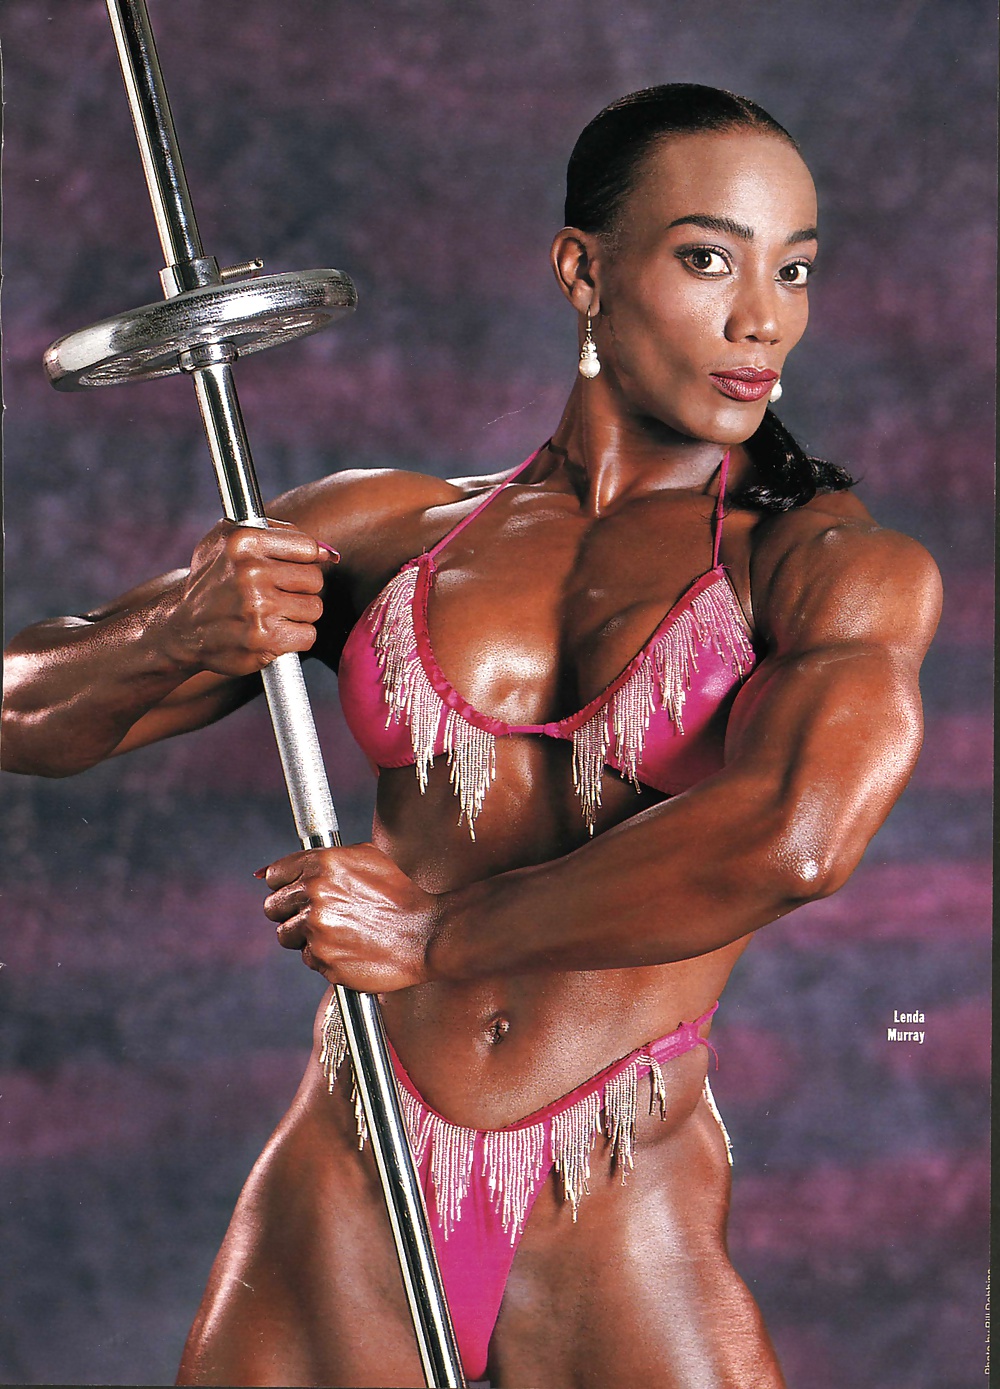 Lenda murray: ms olympia, sexy amazing muscle fbb - ameman
 #25225248